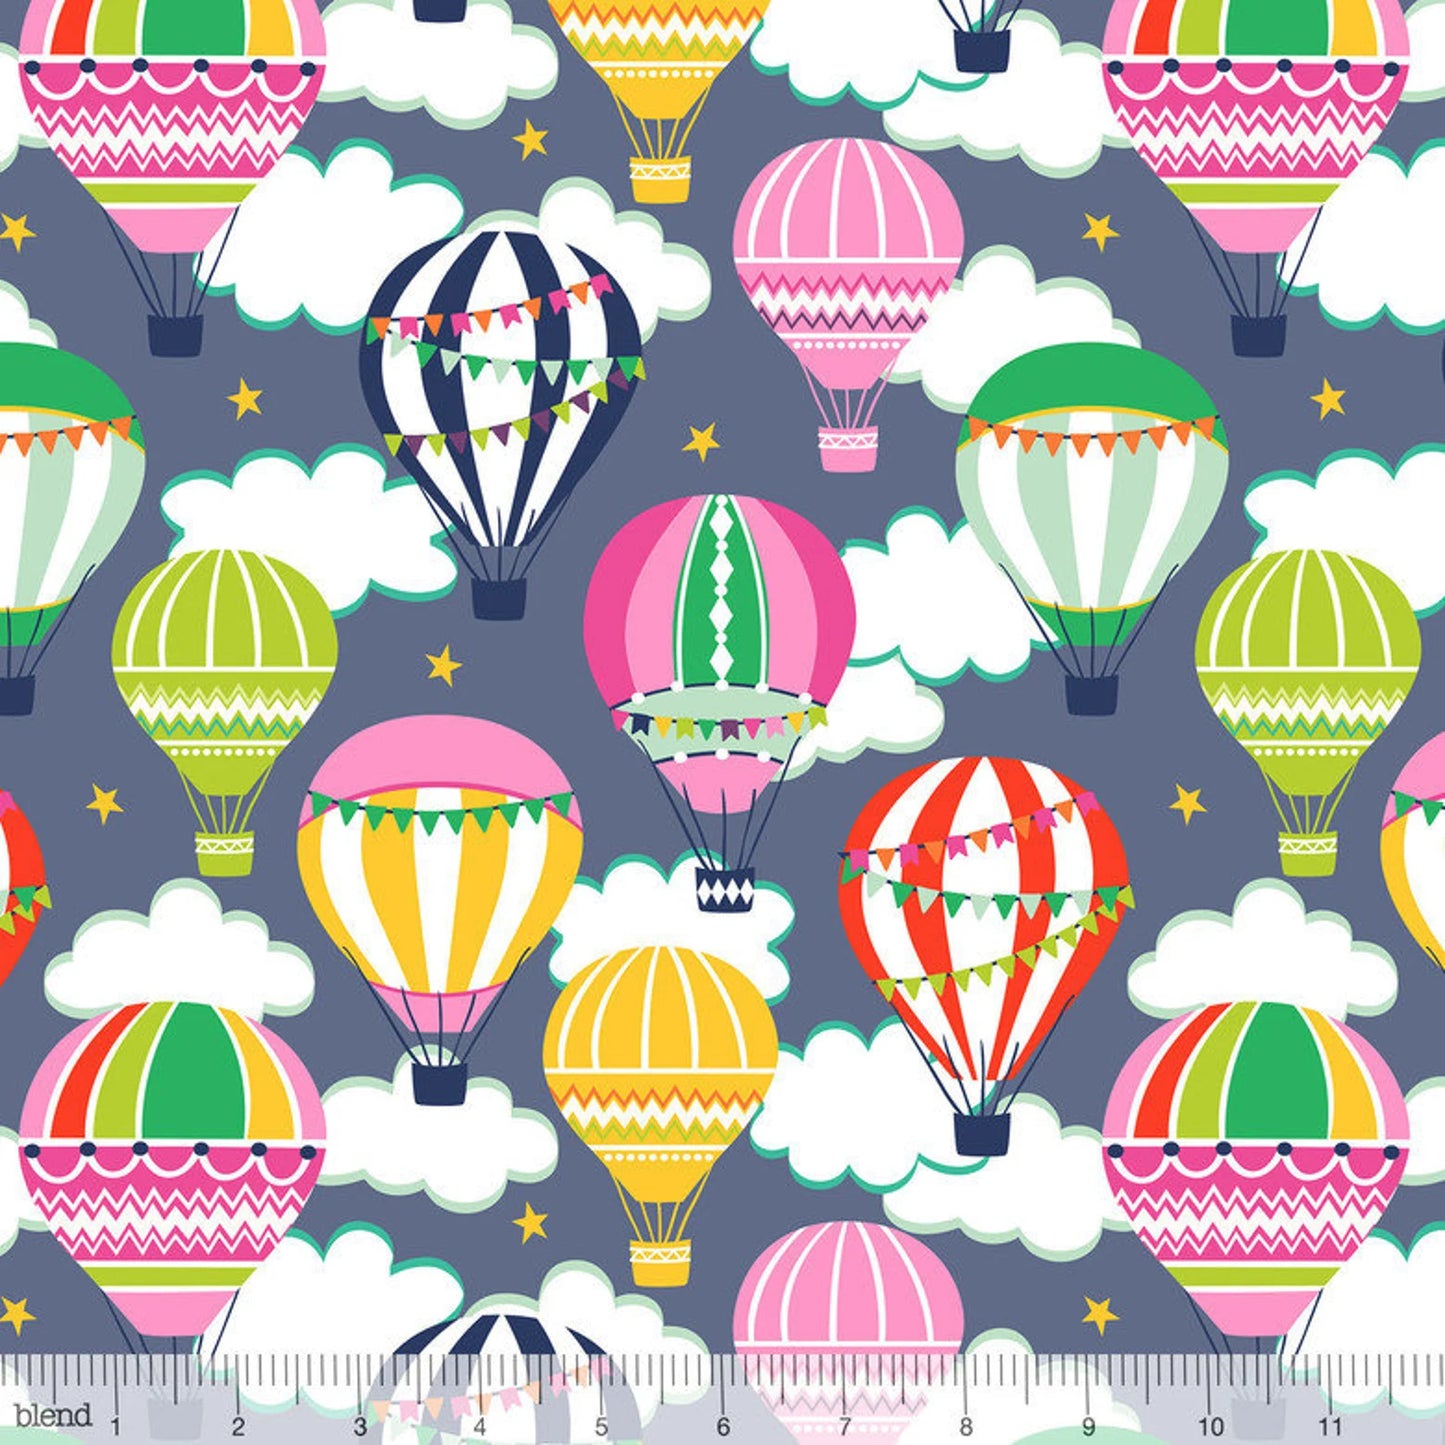 Chasing Rainbows Fabric - Hot Air Balloon - Sky High - Maude Asbury - Wanderlust - Cotton Fabric